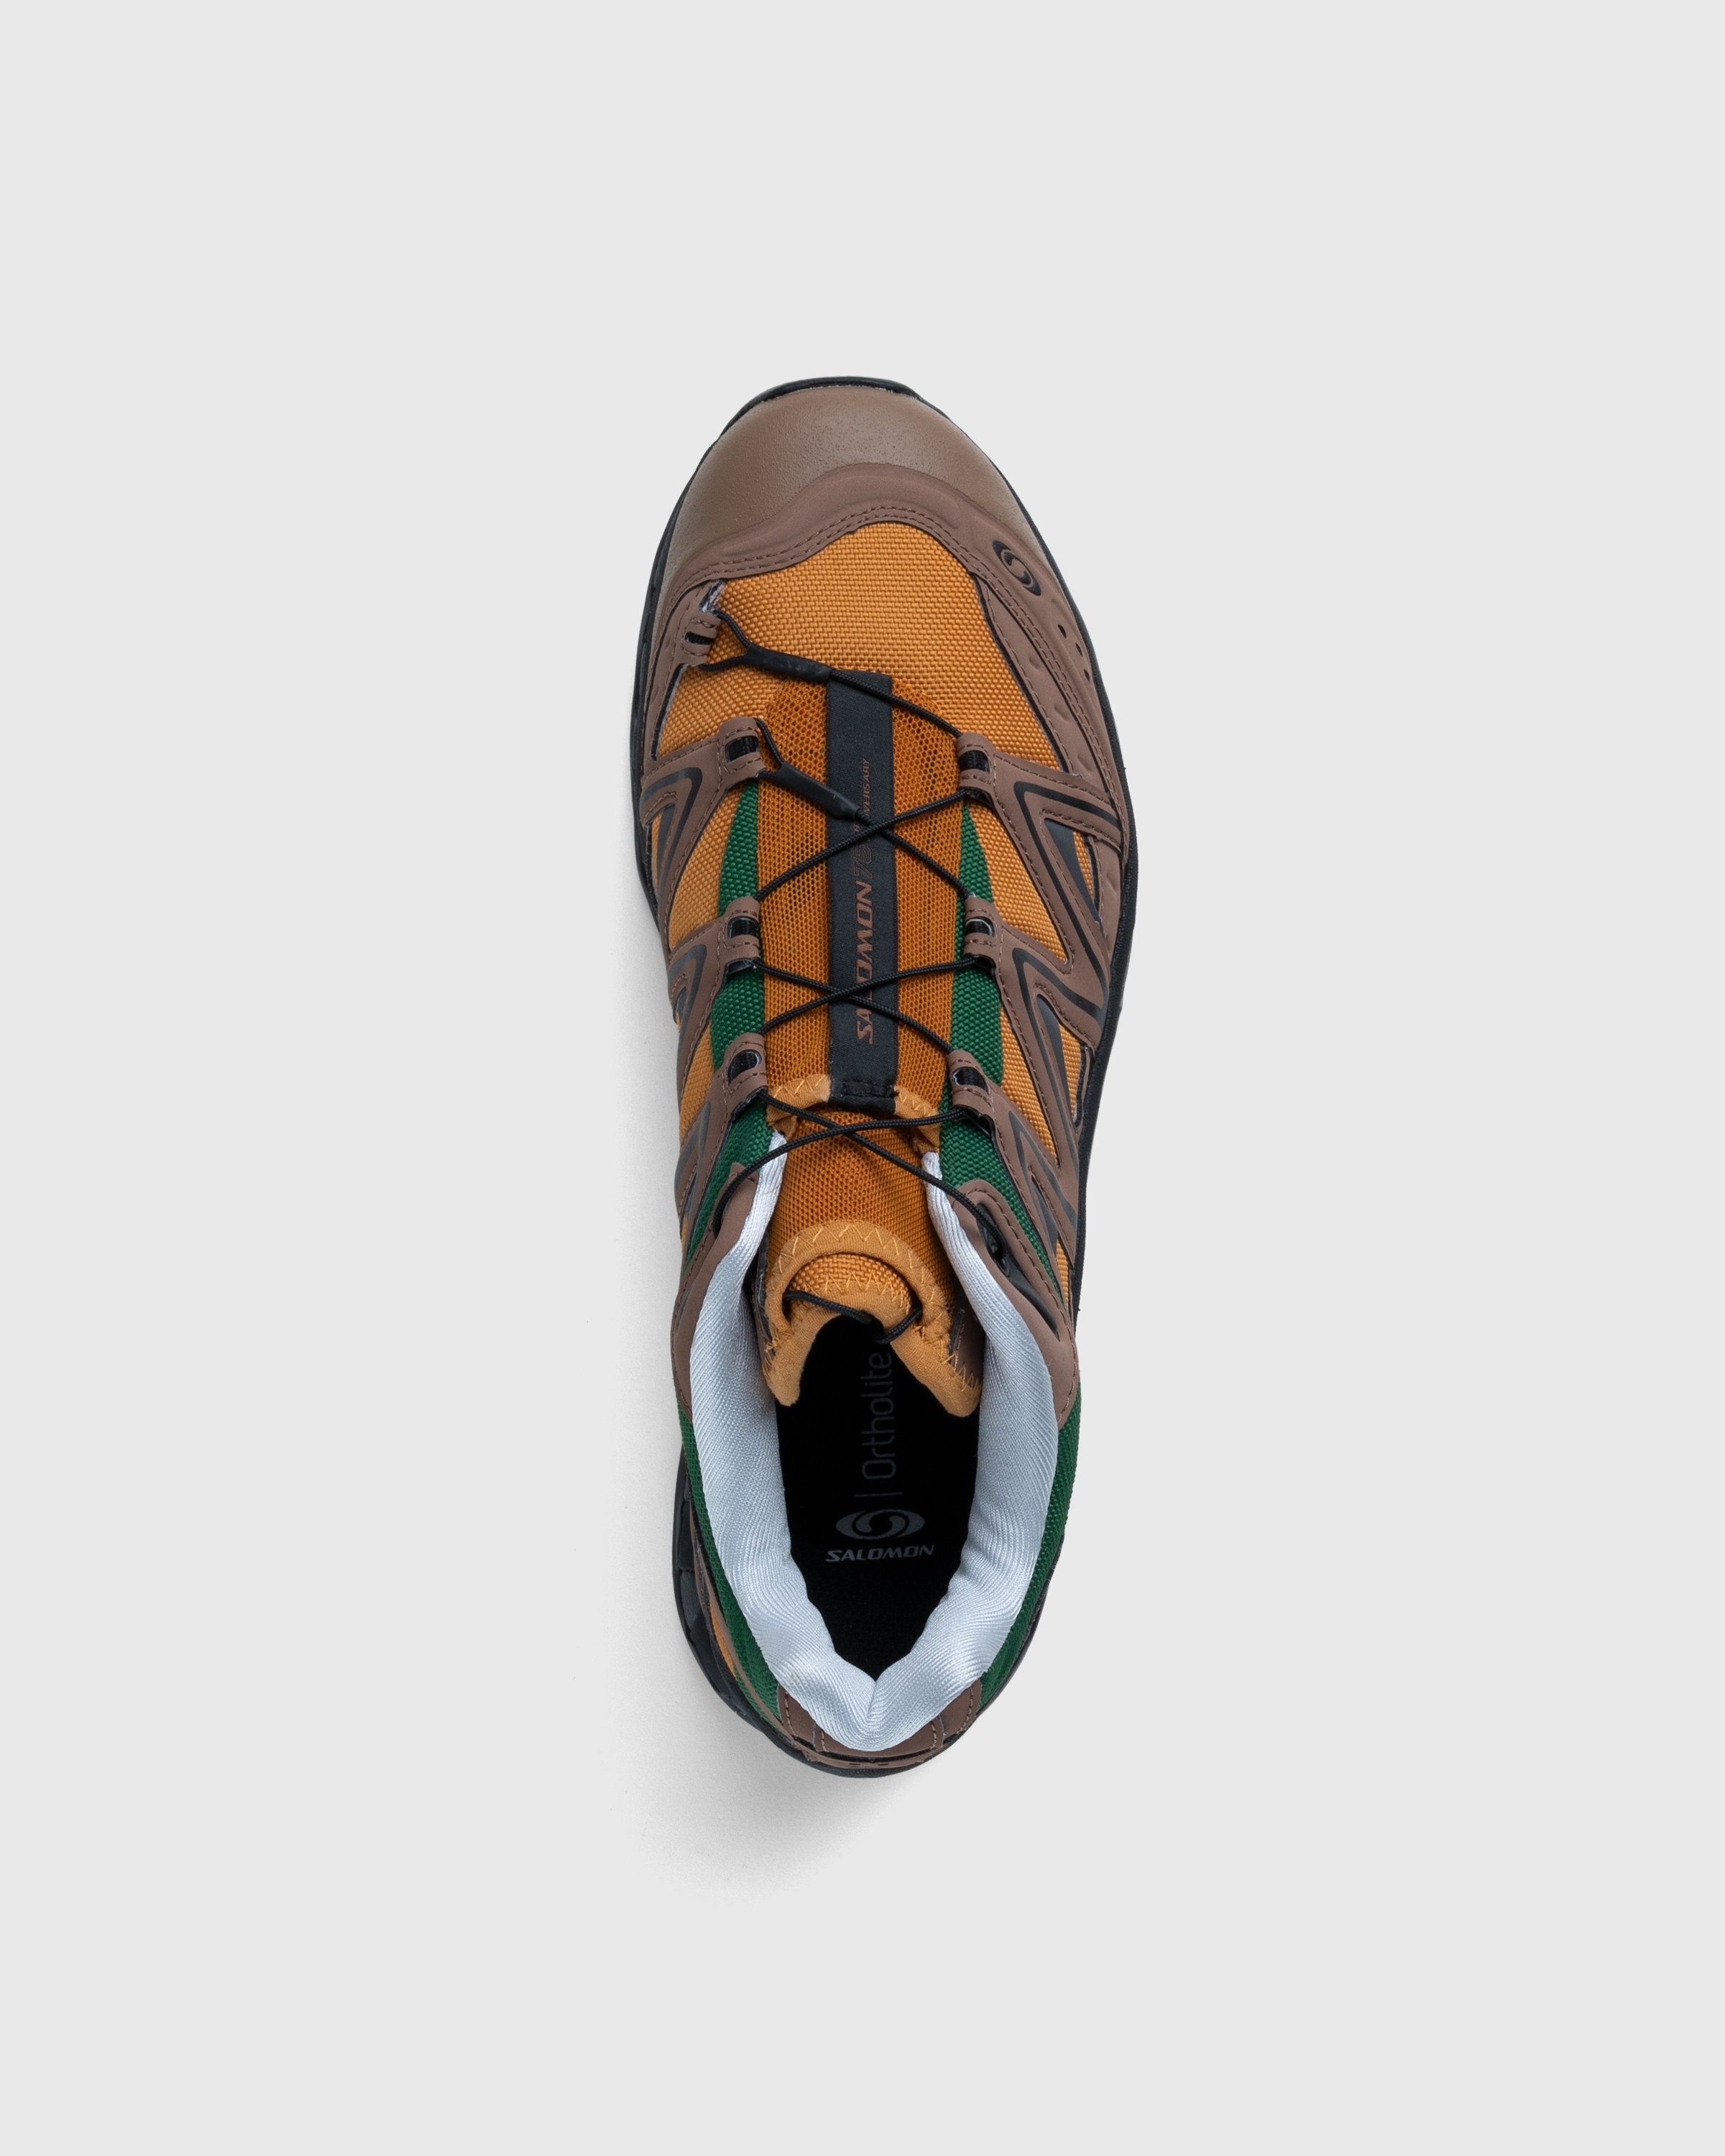 Salomon – XT-Quest 75th Golden Oak/Acorn/Black - Low Top Sneakers - Brown - Image 4